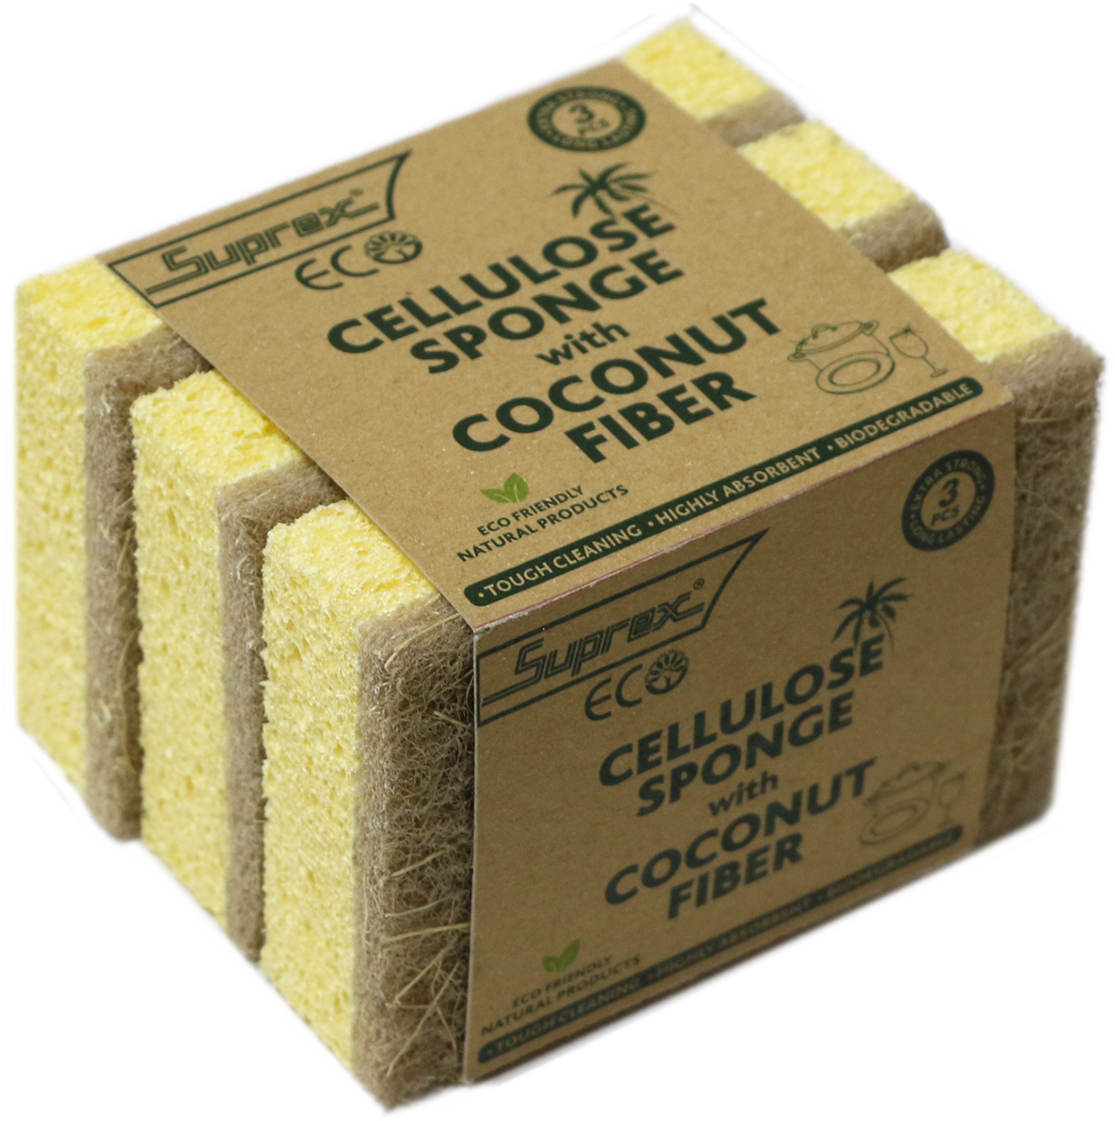 Cellulose sponge with coconut fiber